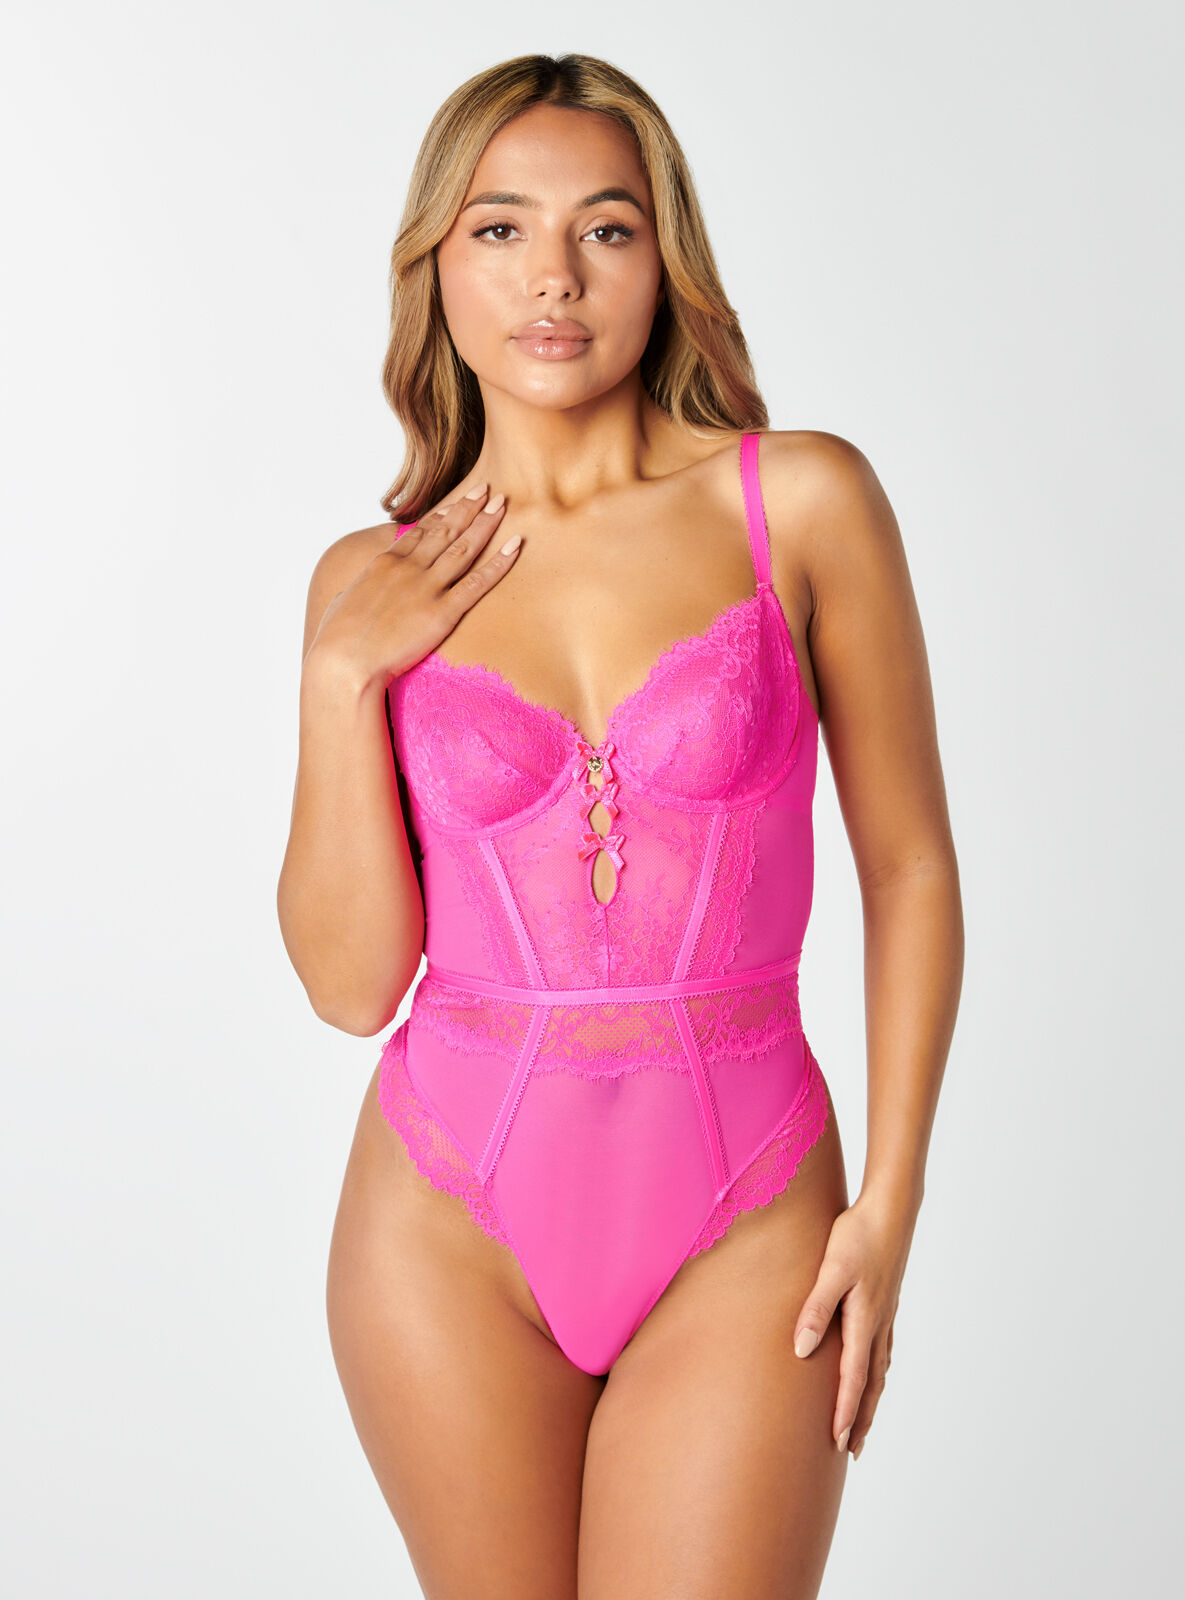 Boux Avenue Aubree body - Hot Pink - 30C